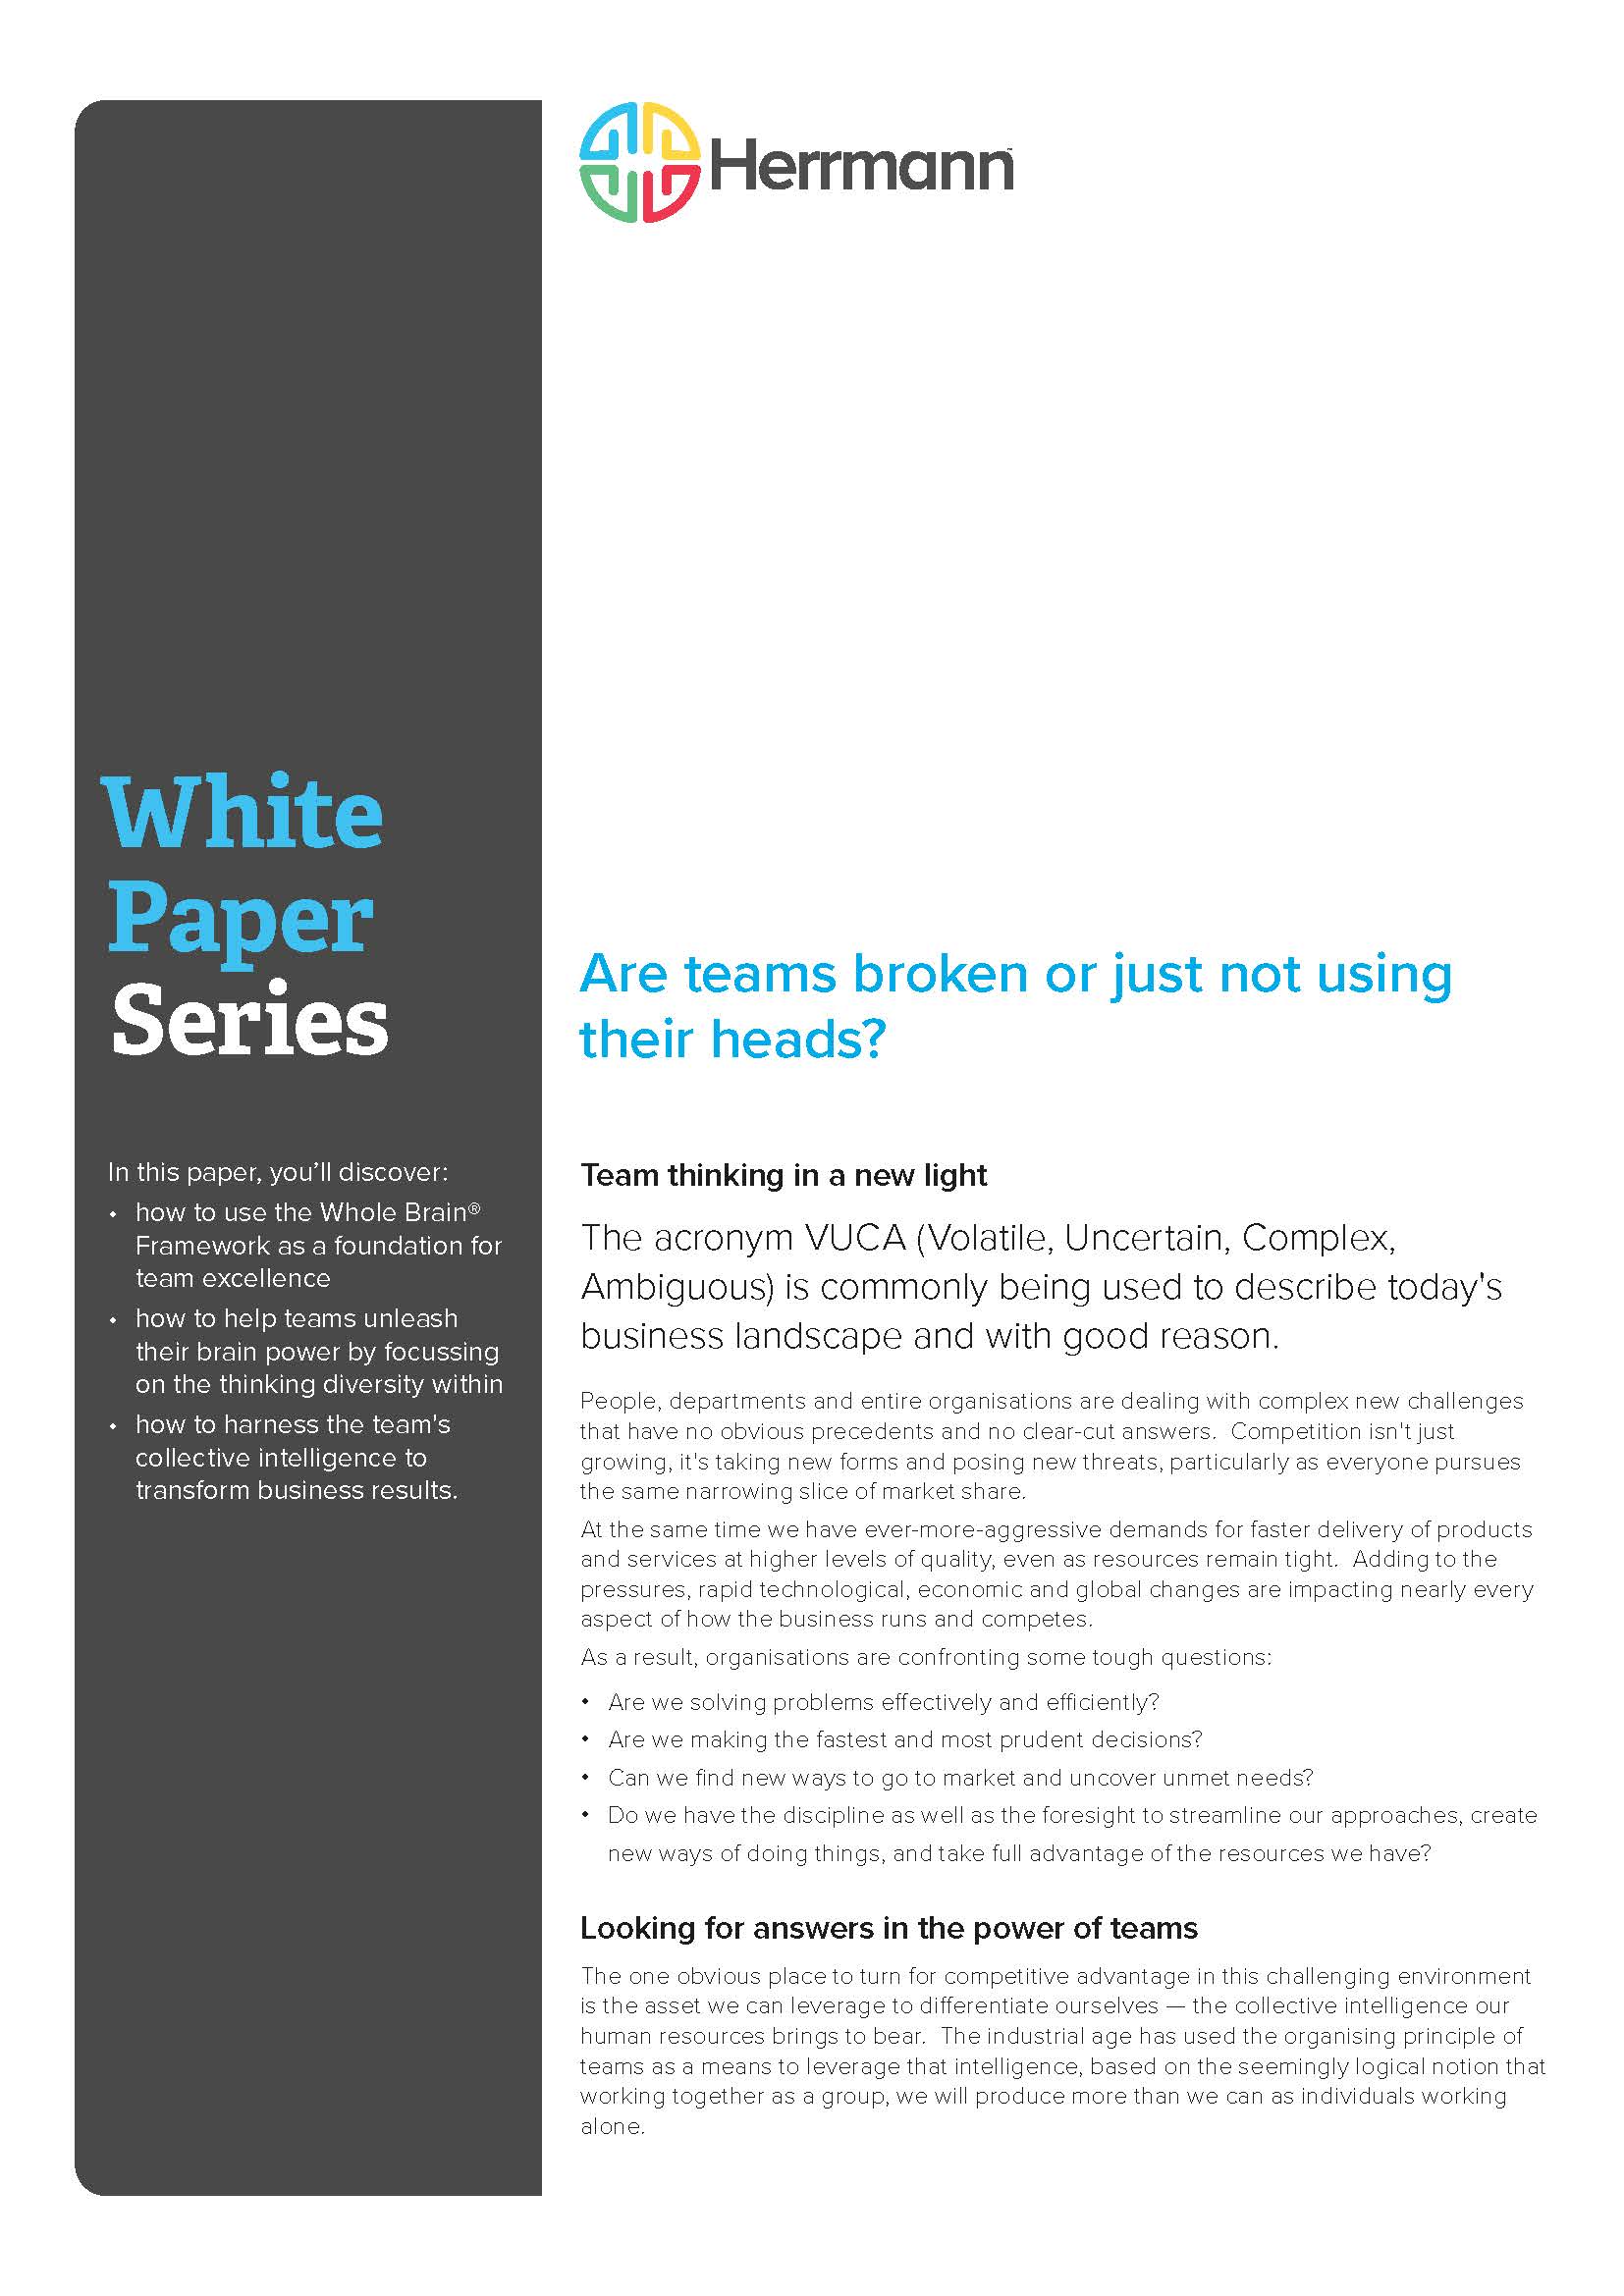 White Paper - Are Teams Broken